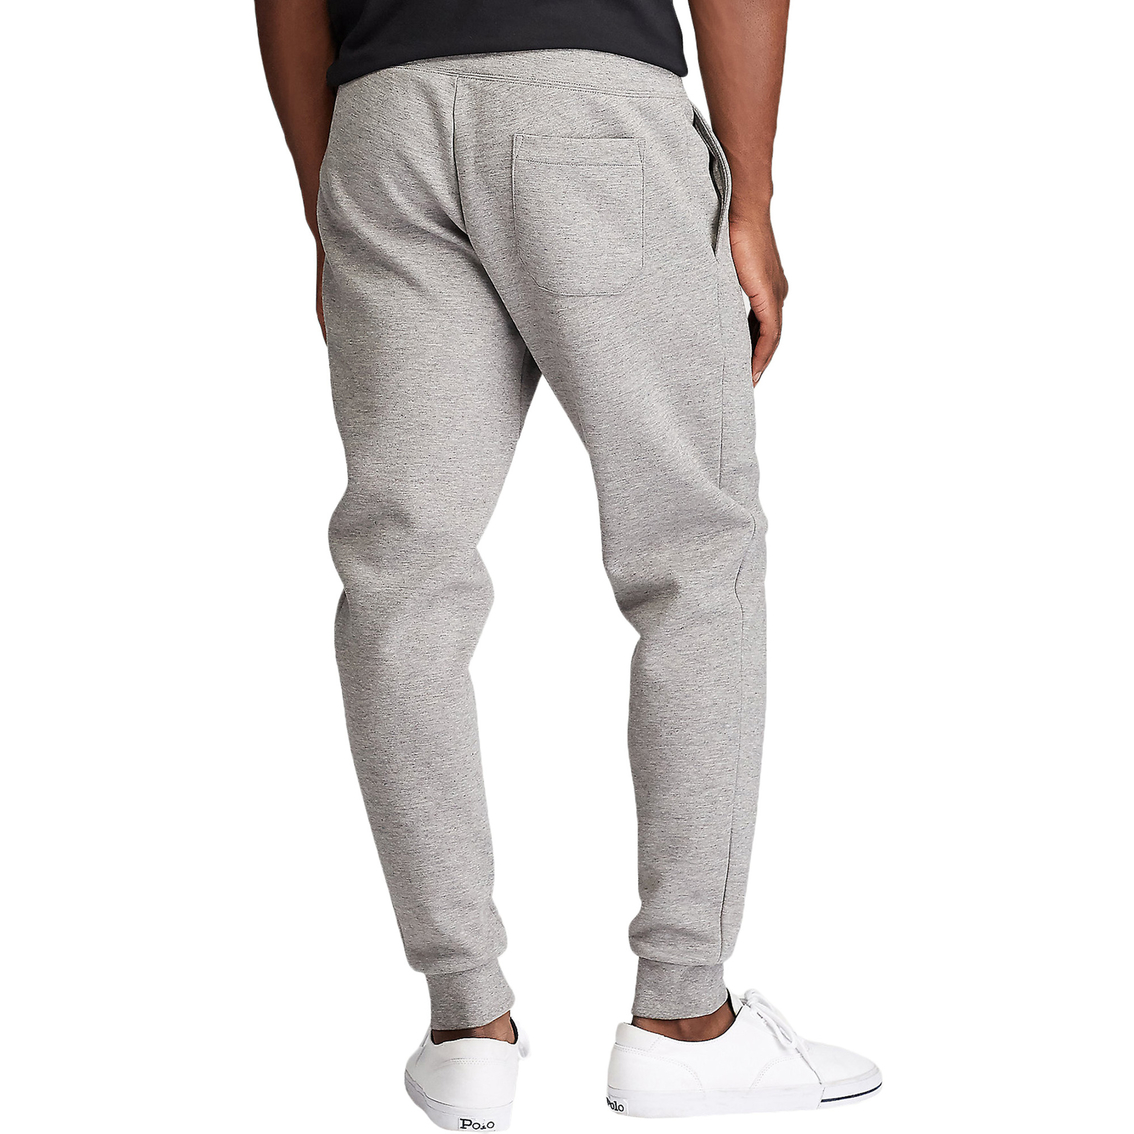 Polo Ralph Lauren Jacquard Double Knit Jogger | Pants | Clothing ...